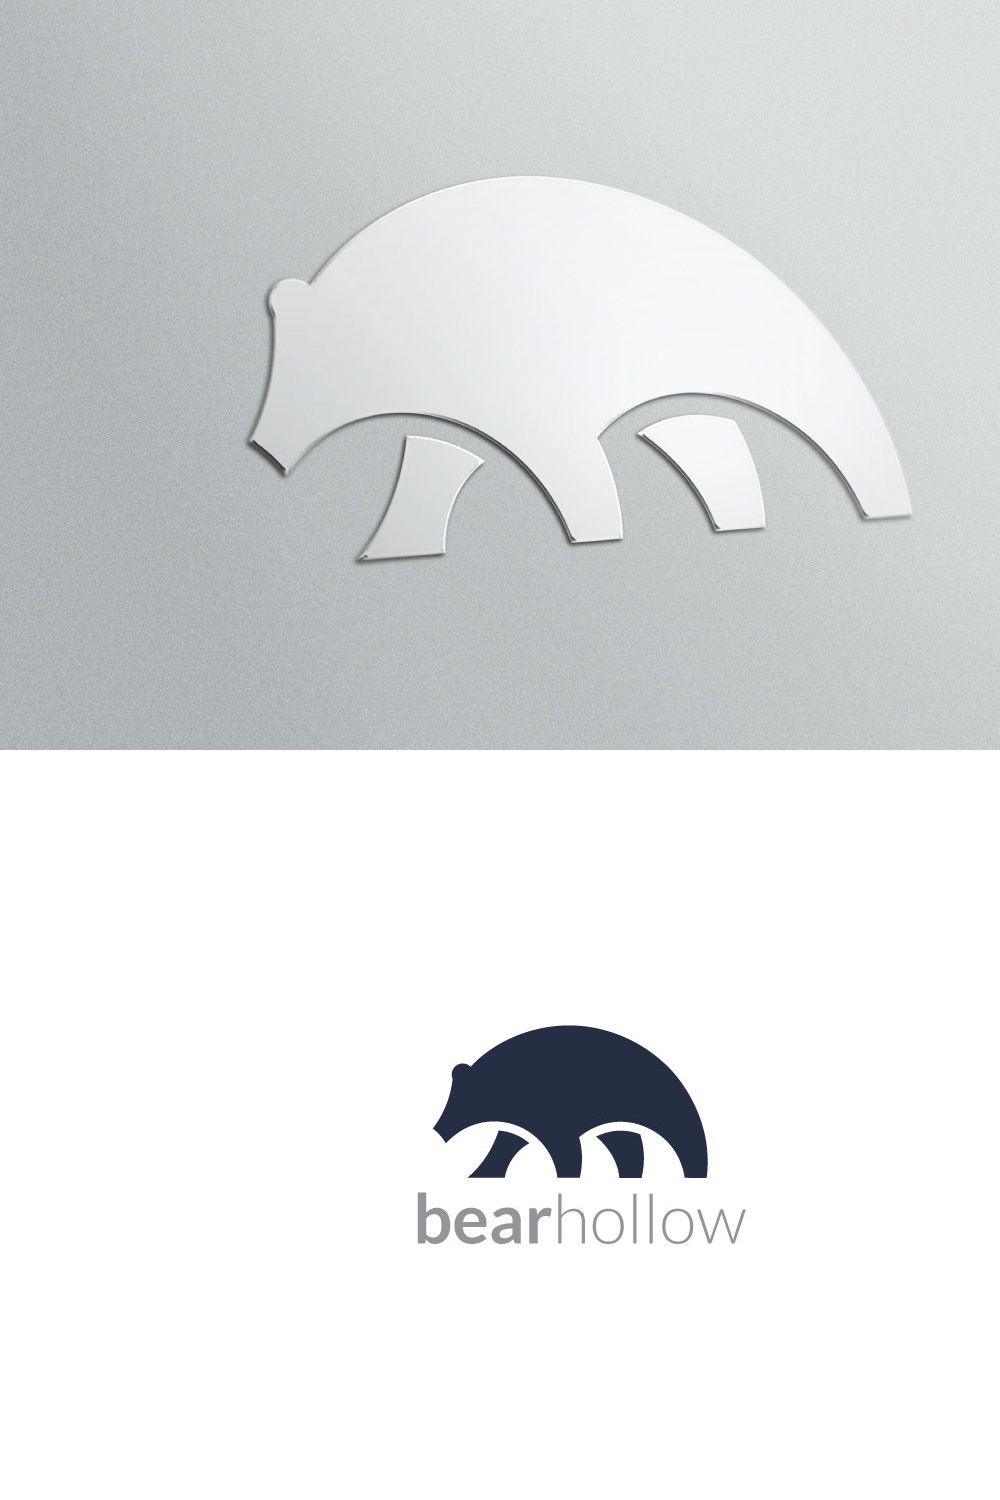 BearHollow - Logo pinterest preview image.